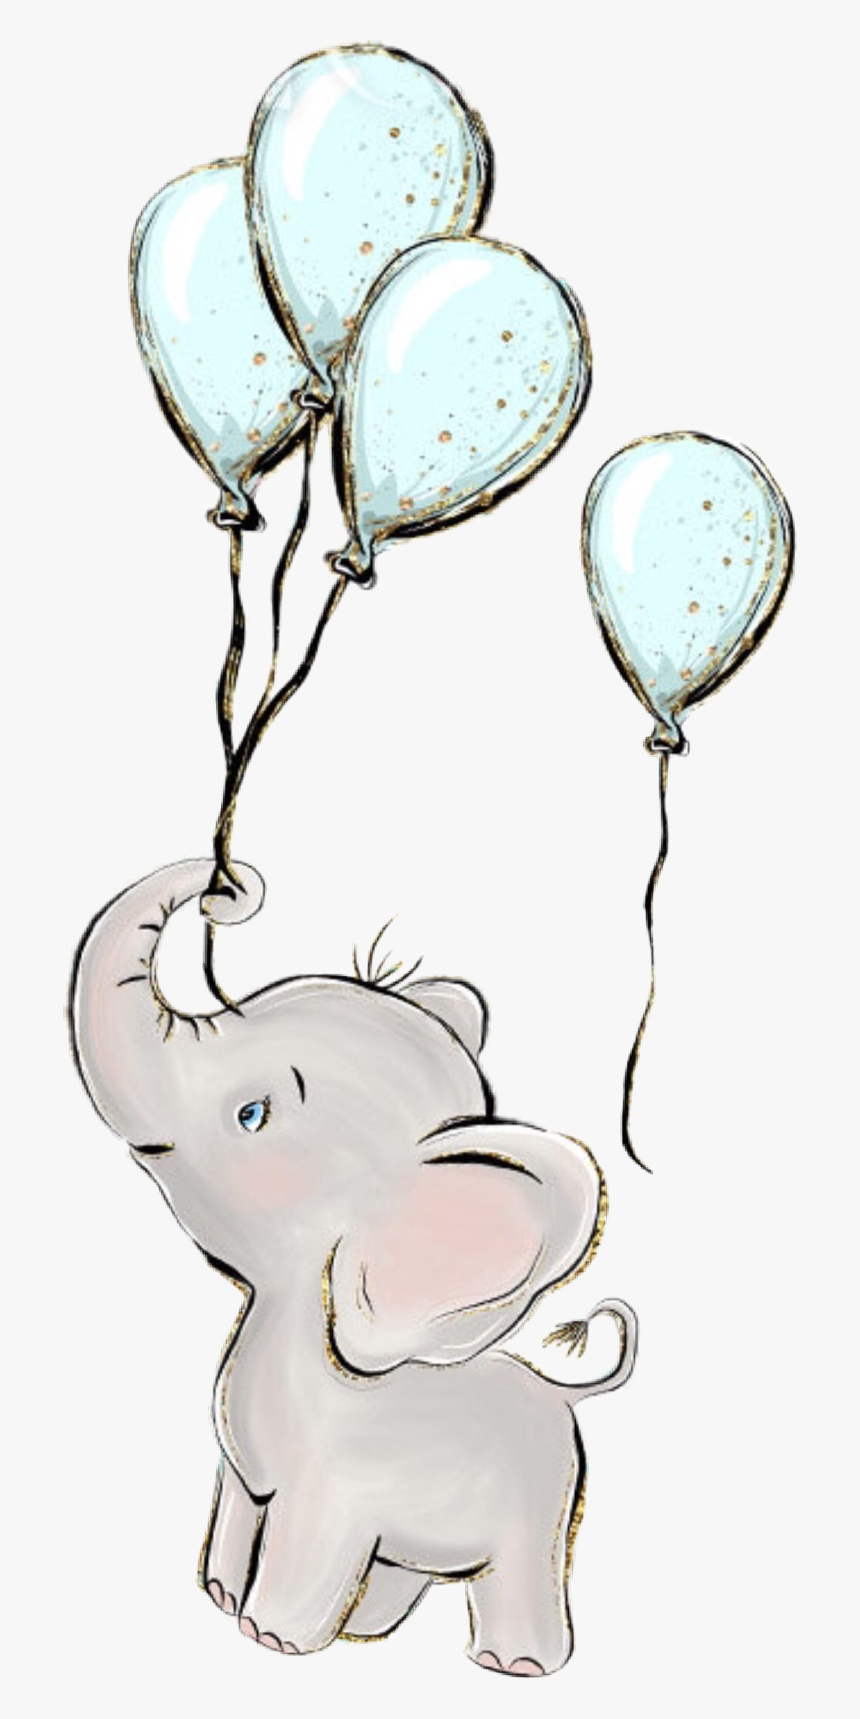 #watercolor #elephant #balloons 